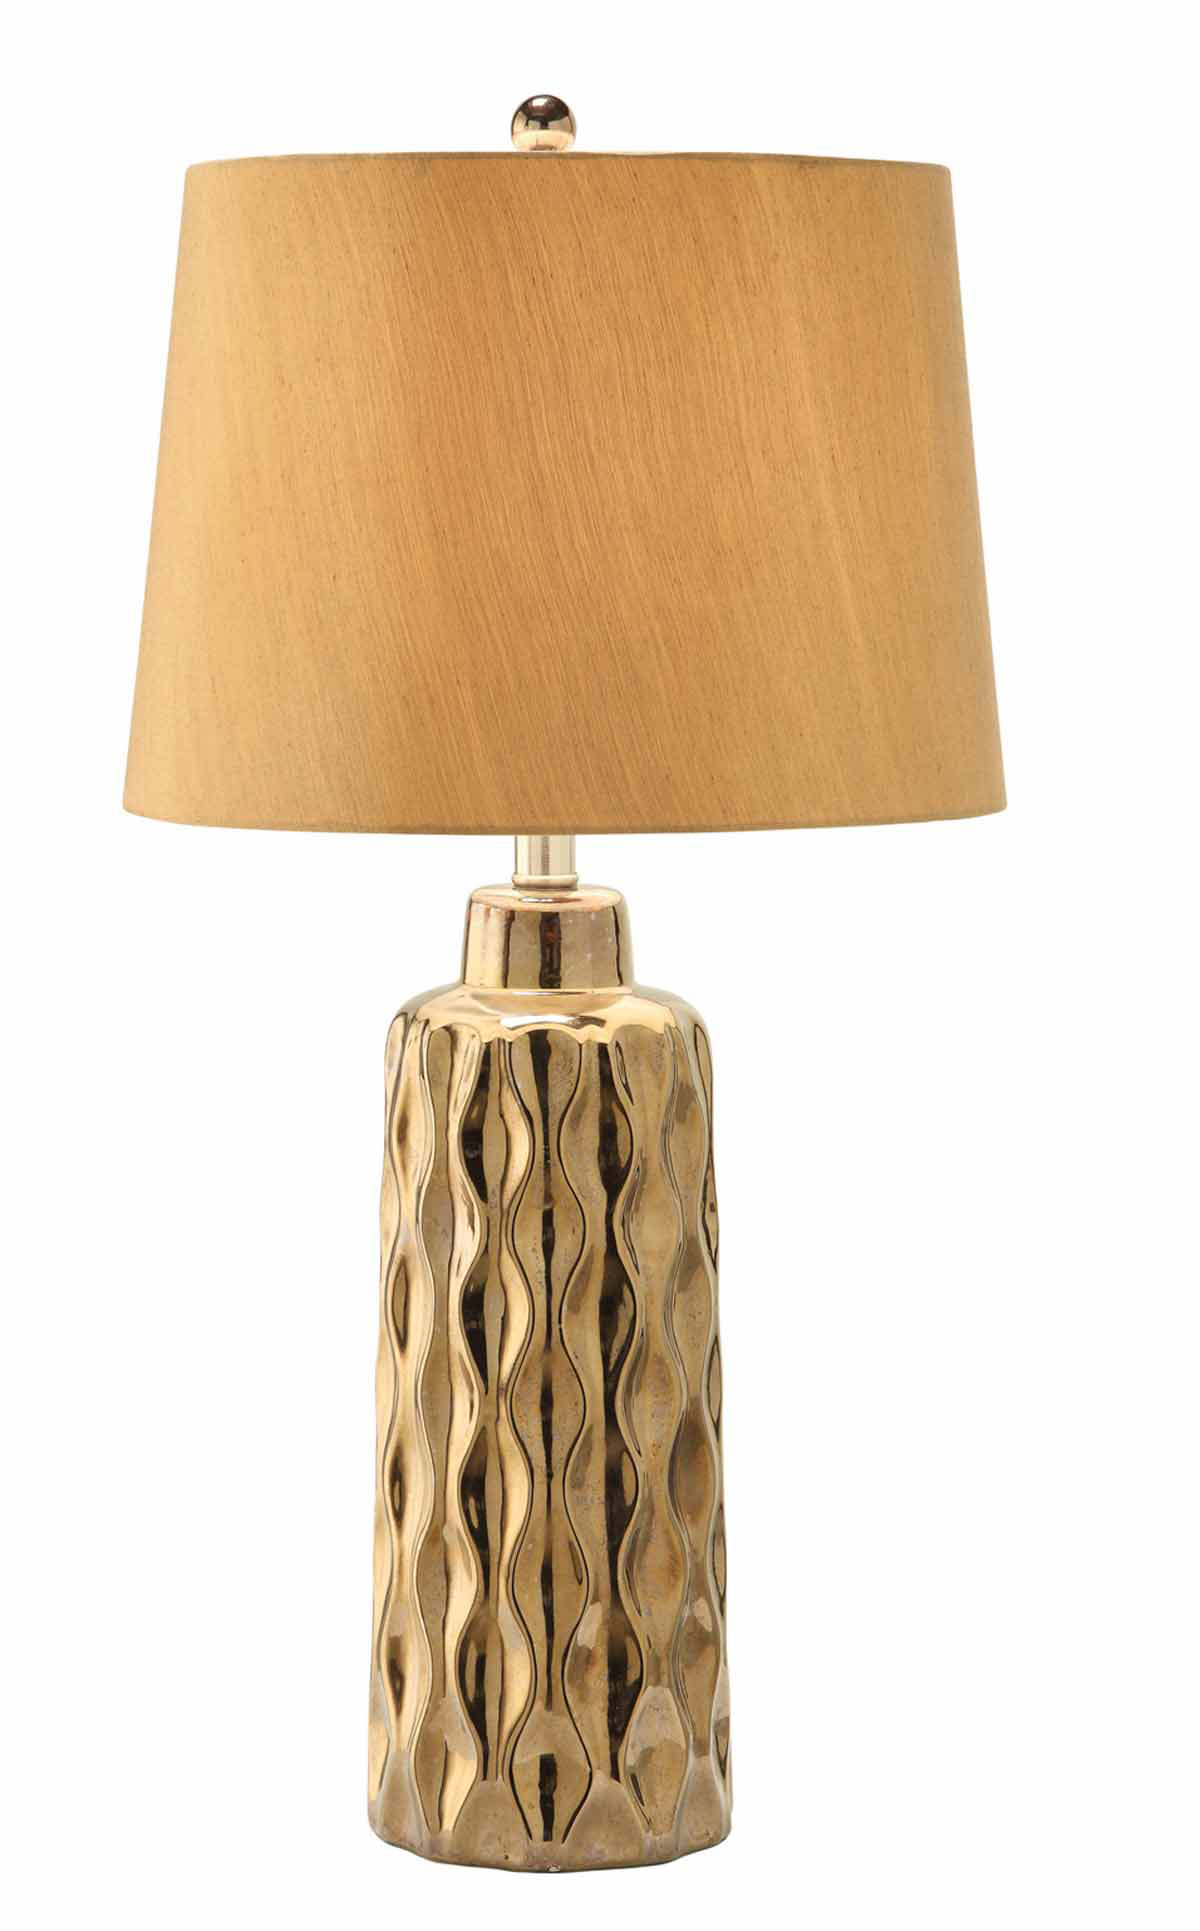 Coaster 901517 Table Lamp - Anitque Golden Brown